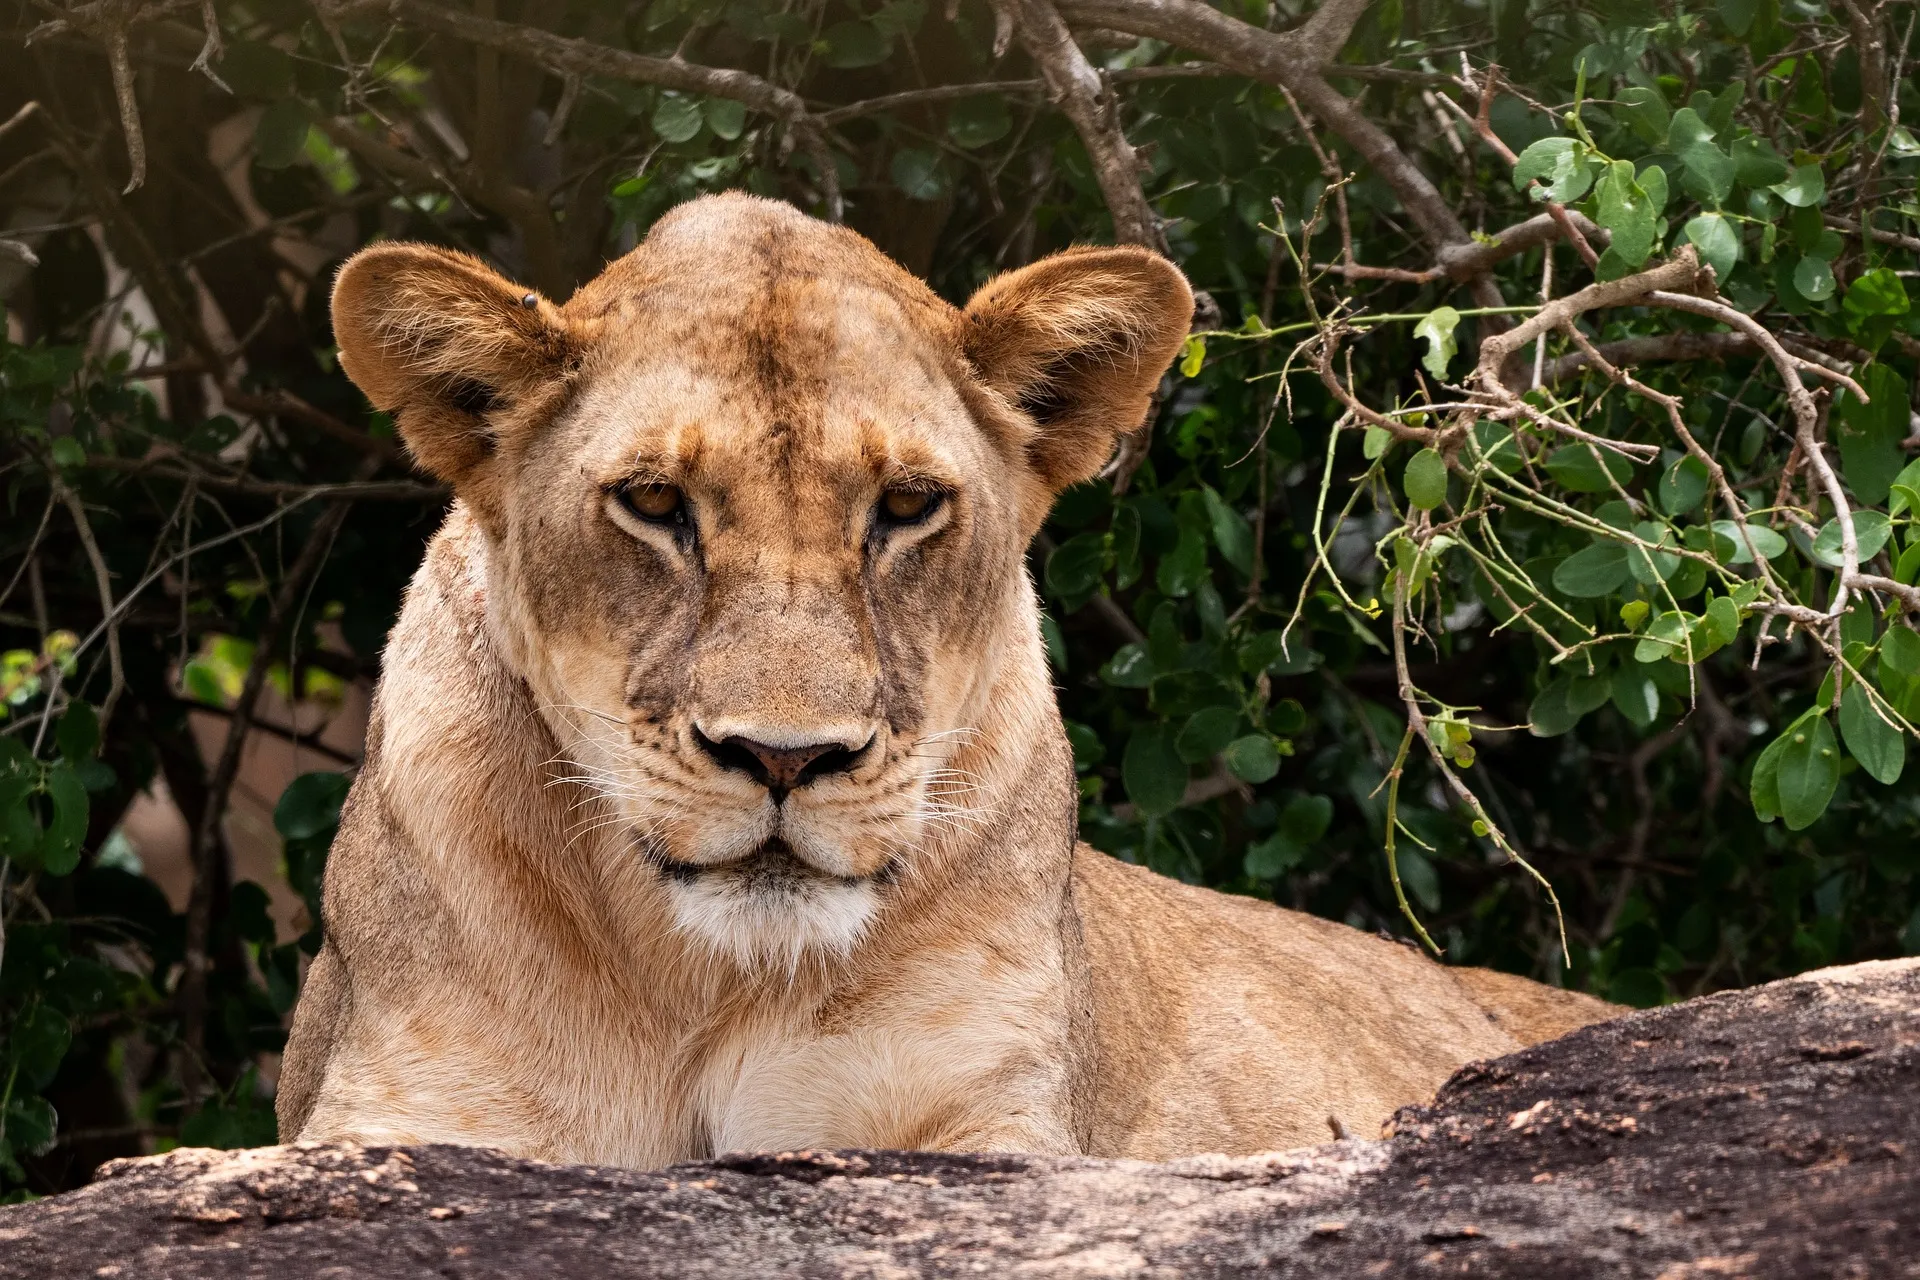 Lioness - 1 day safari mombasa kenya